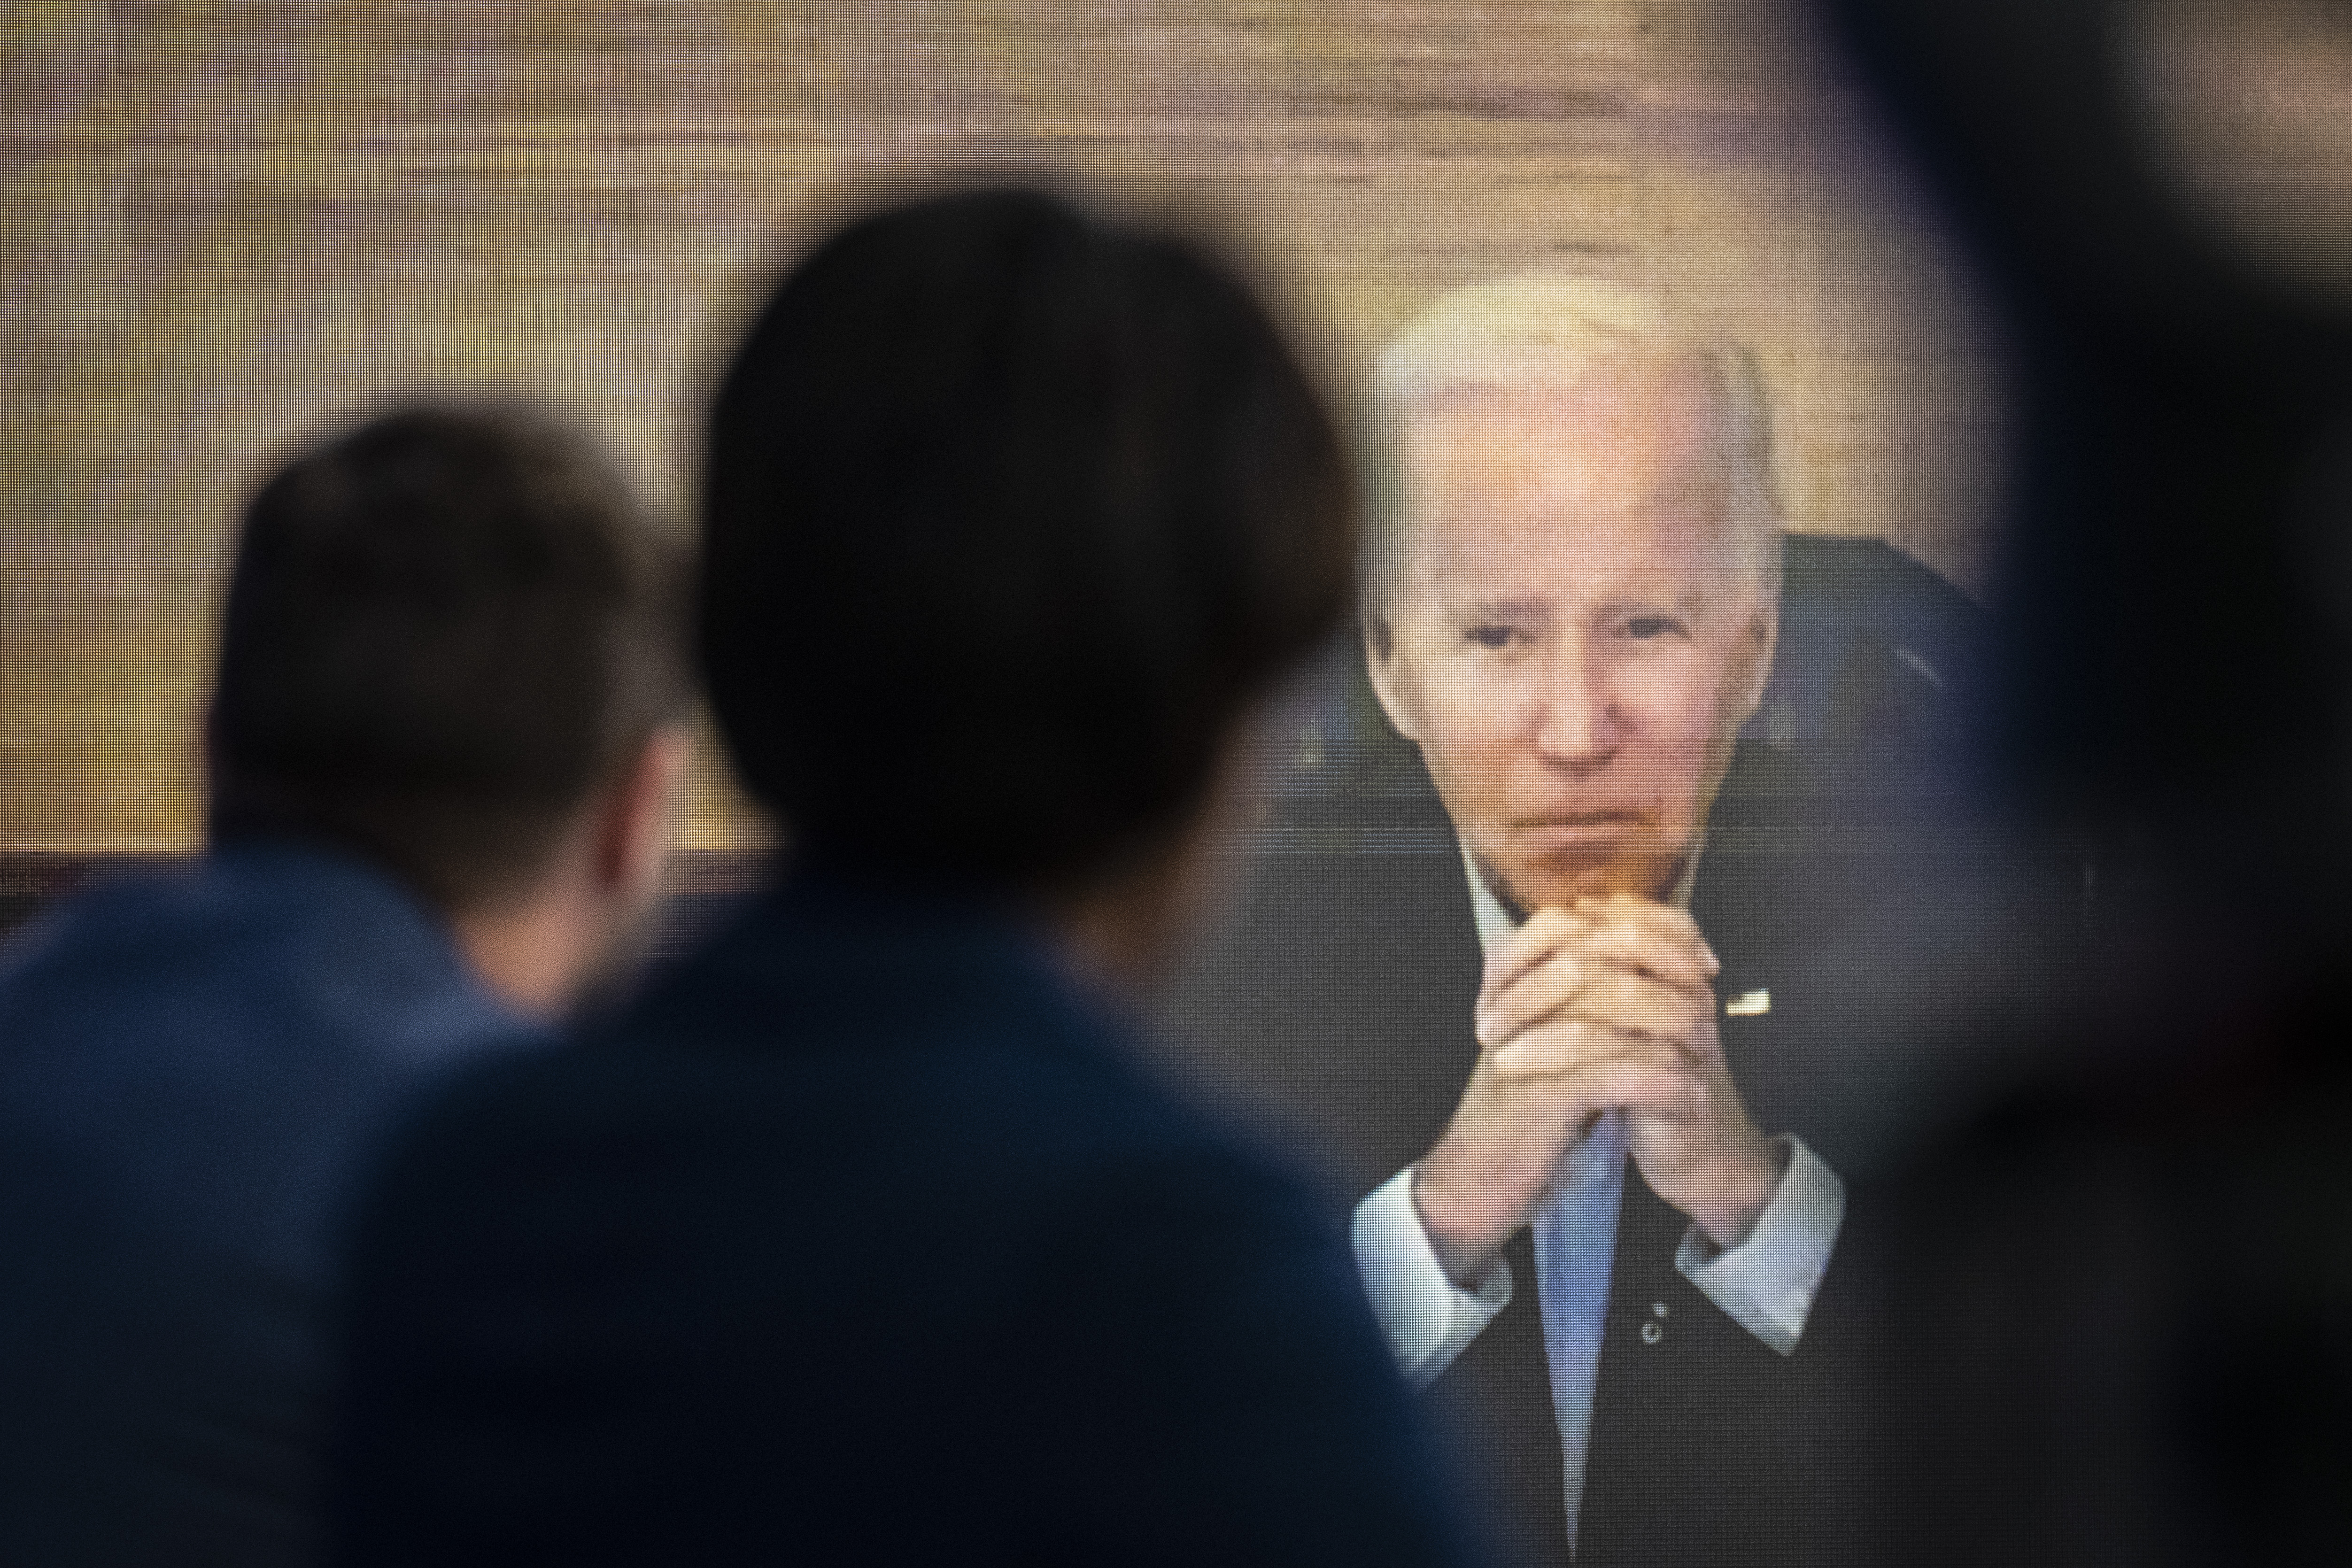 Despite Paxlovid, Biden positive yet again in a case of COVID rebound, White House doctor says